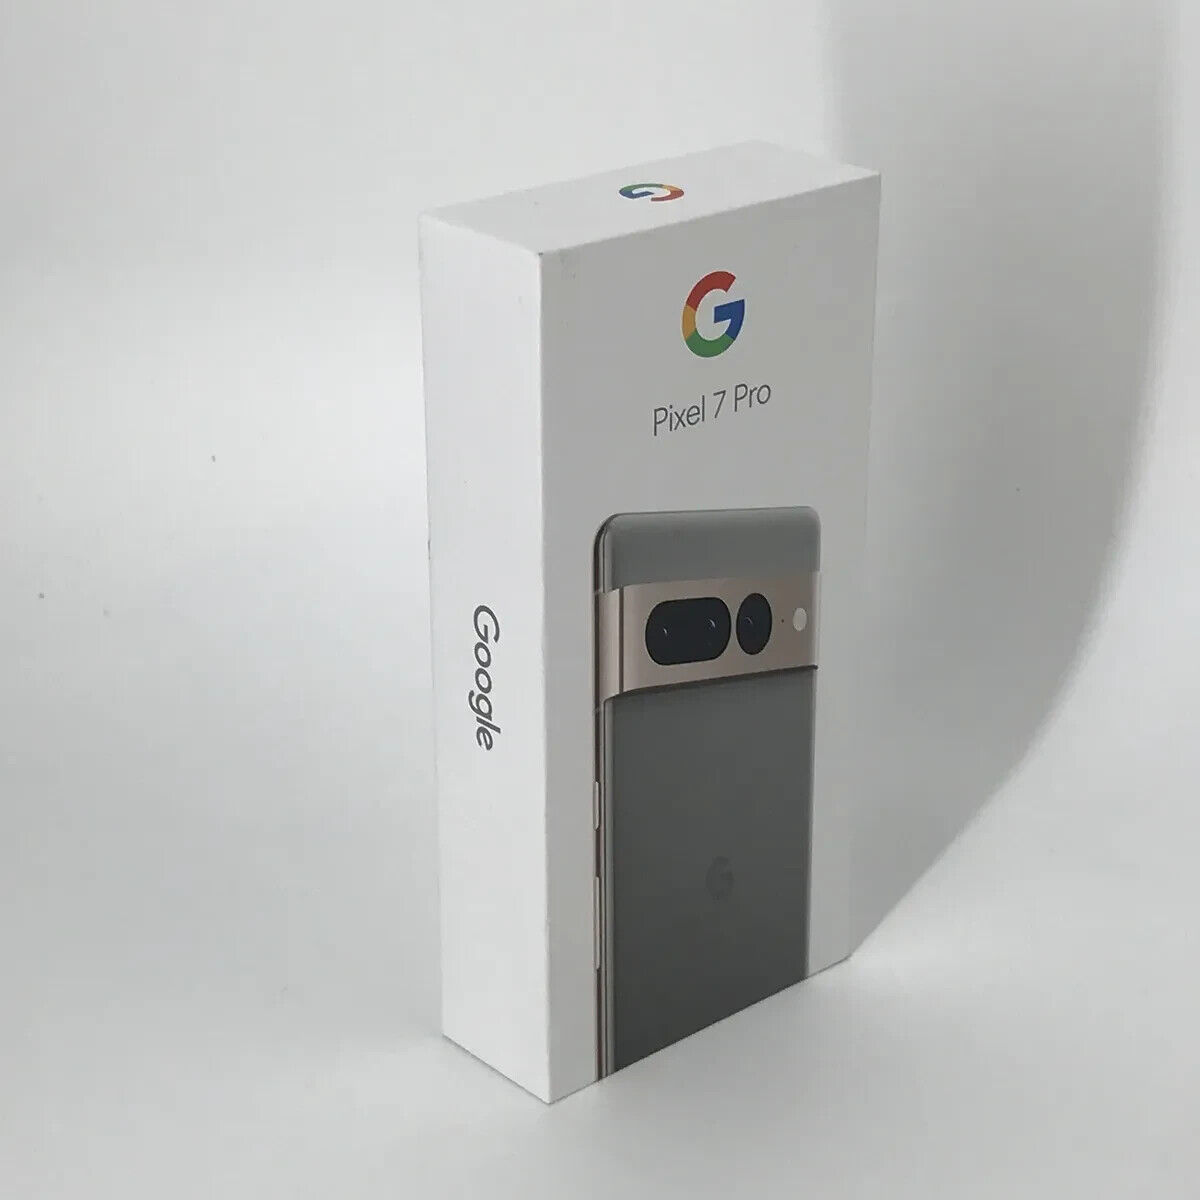 Google Pixel 7 Pro GE2AE - 256GB - Hazel (Unlocked) Brand New in Box and Sealed